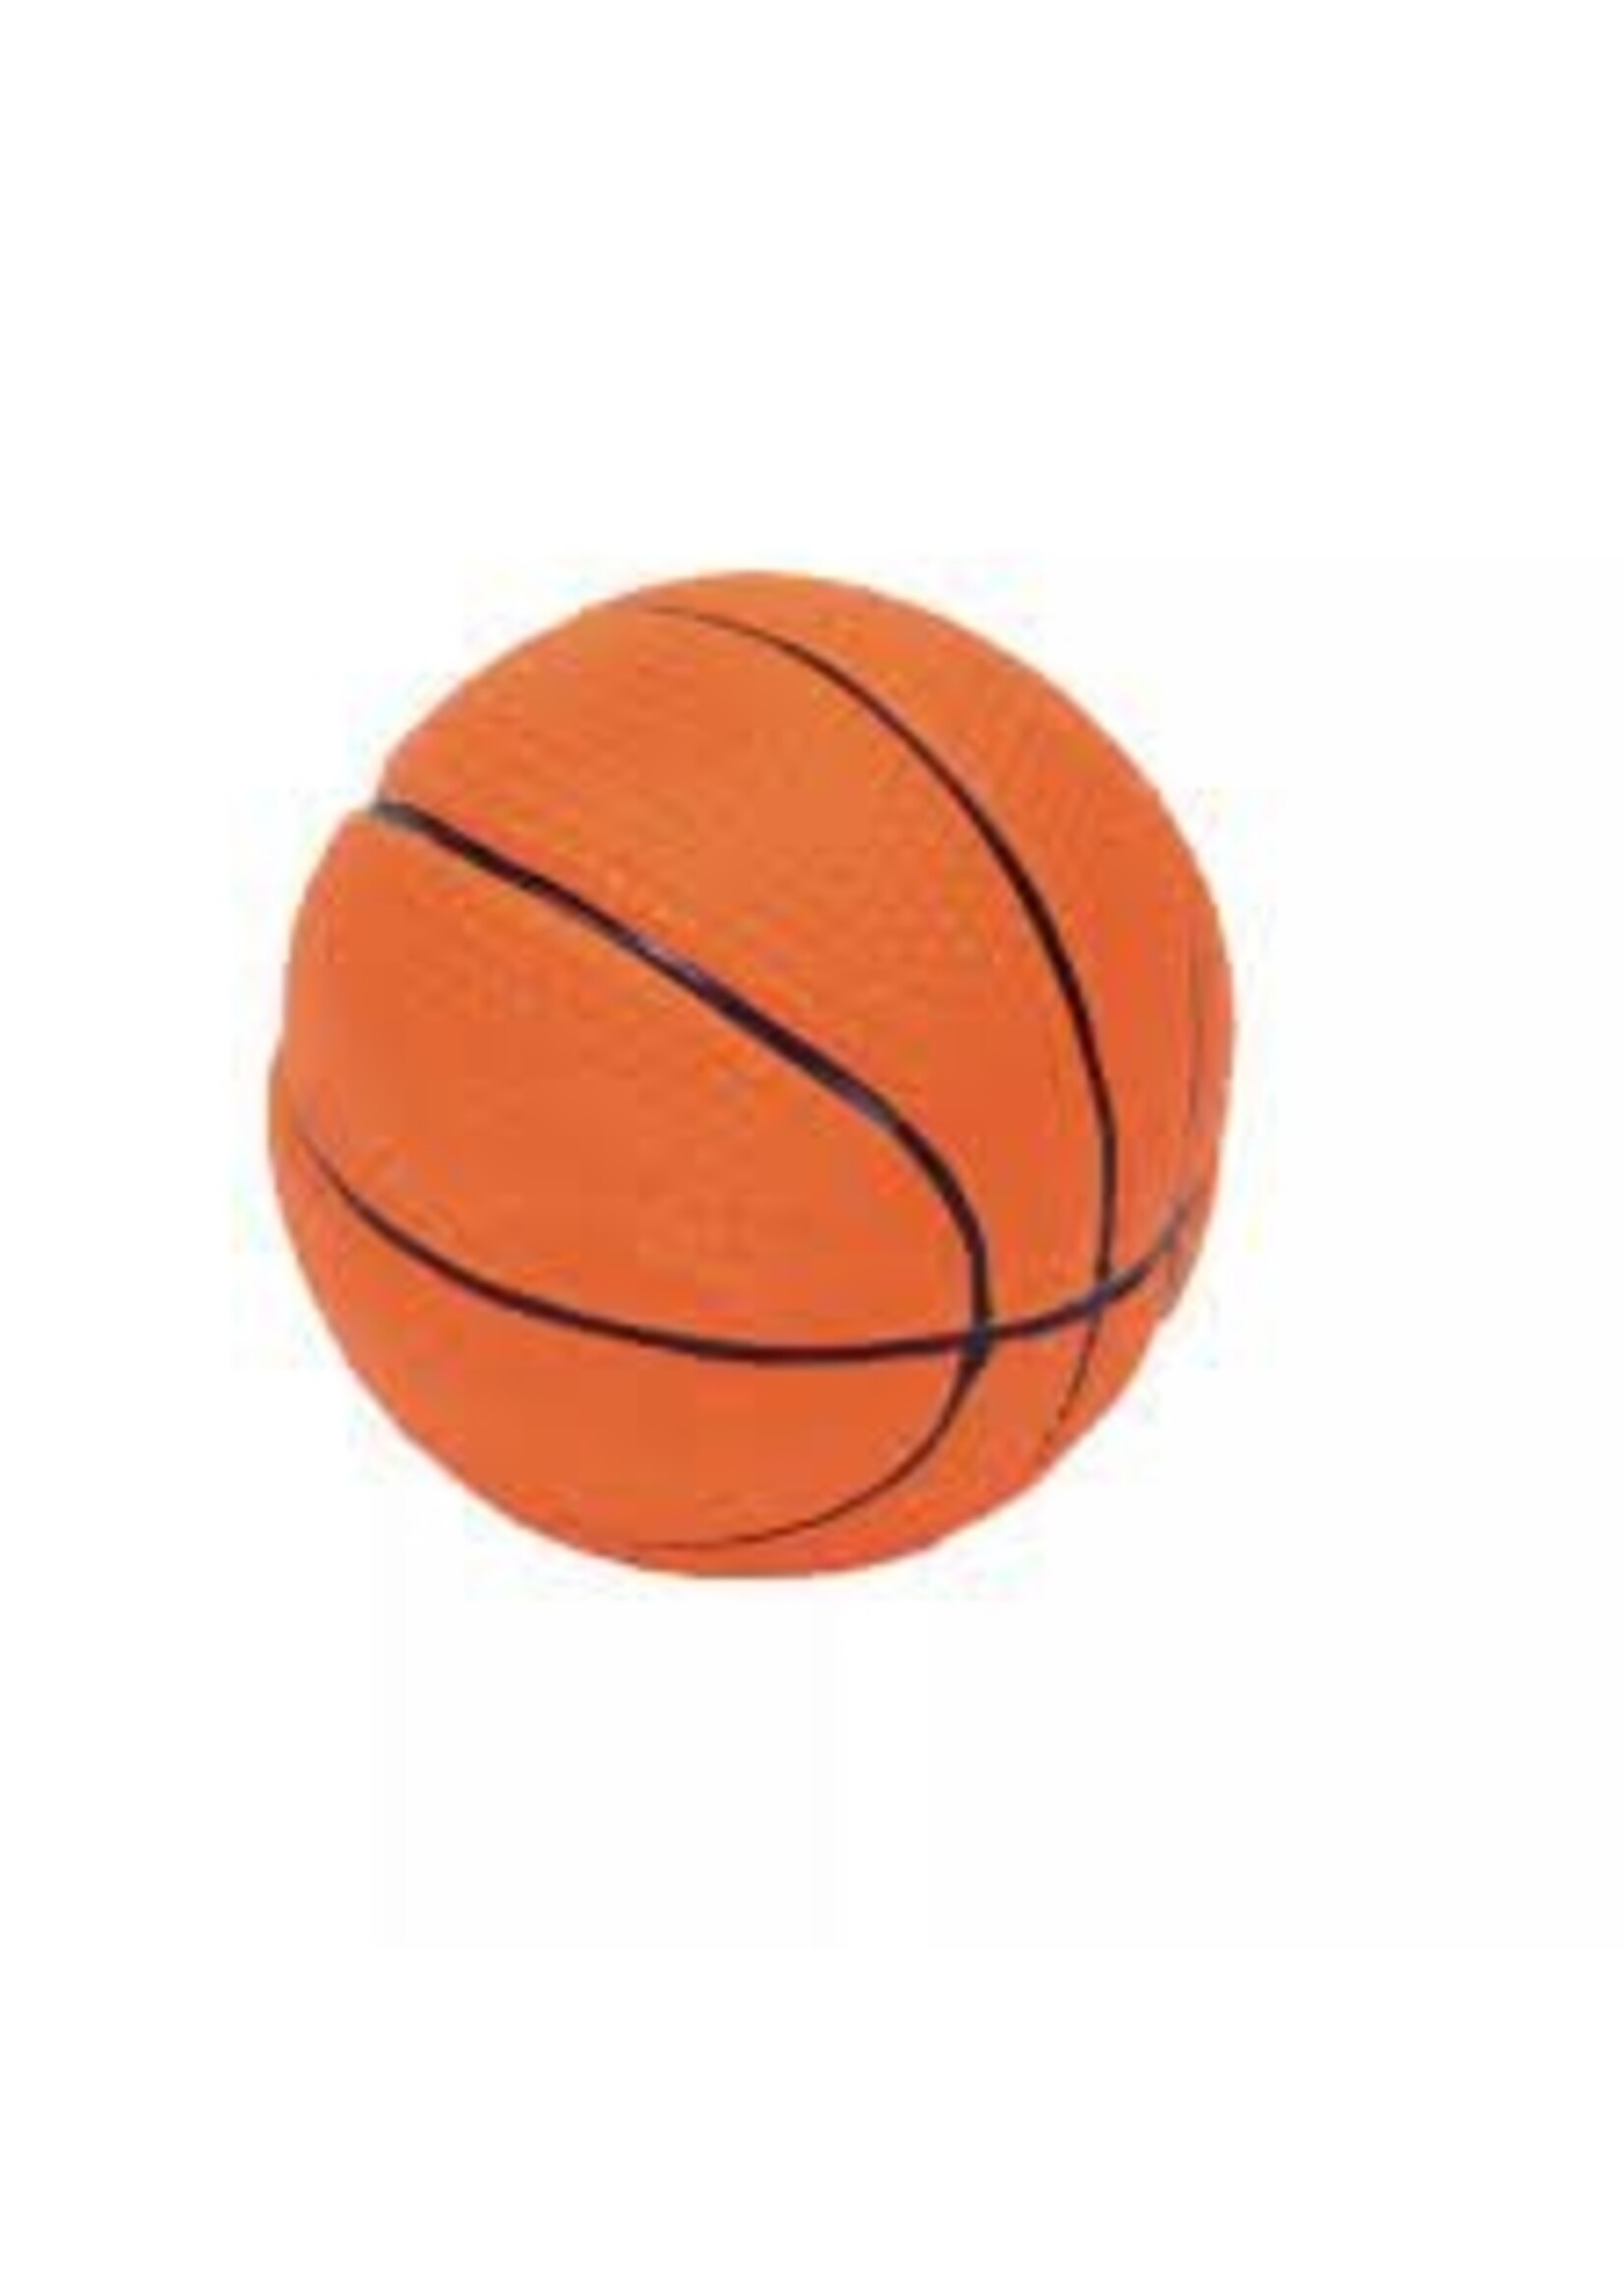 Coastal Pet Products Inc. Rascals 2.5" Latex Basketball